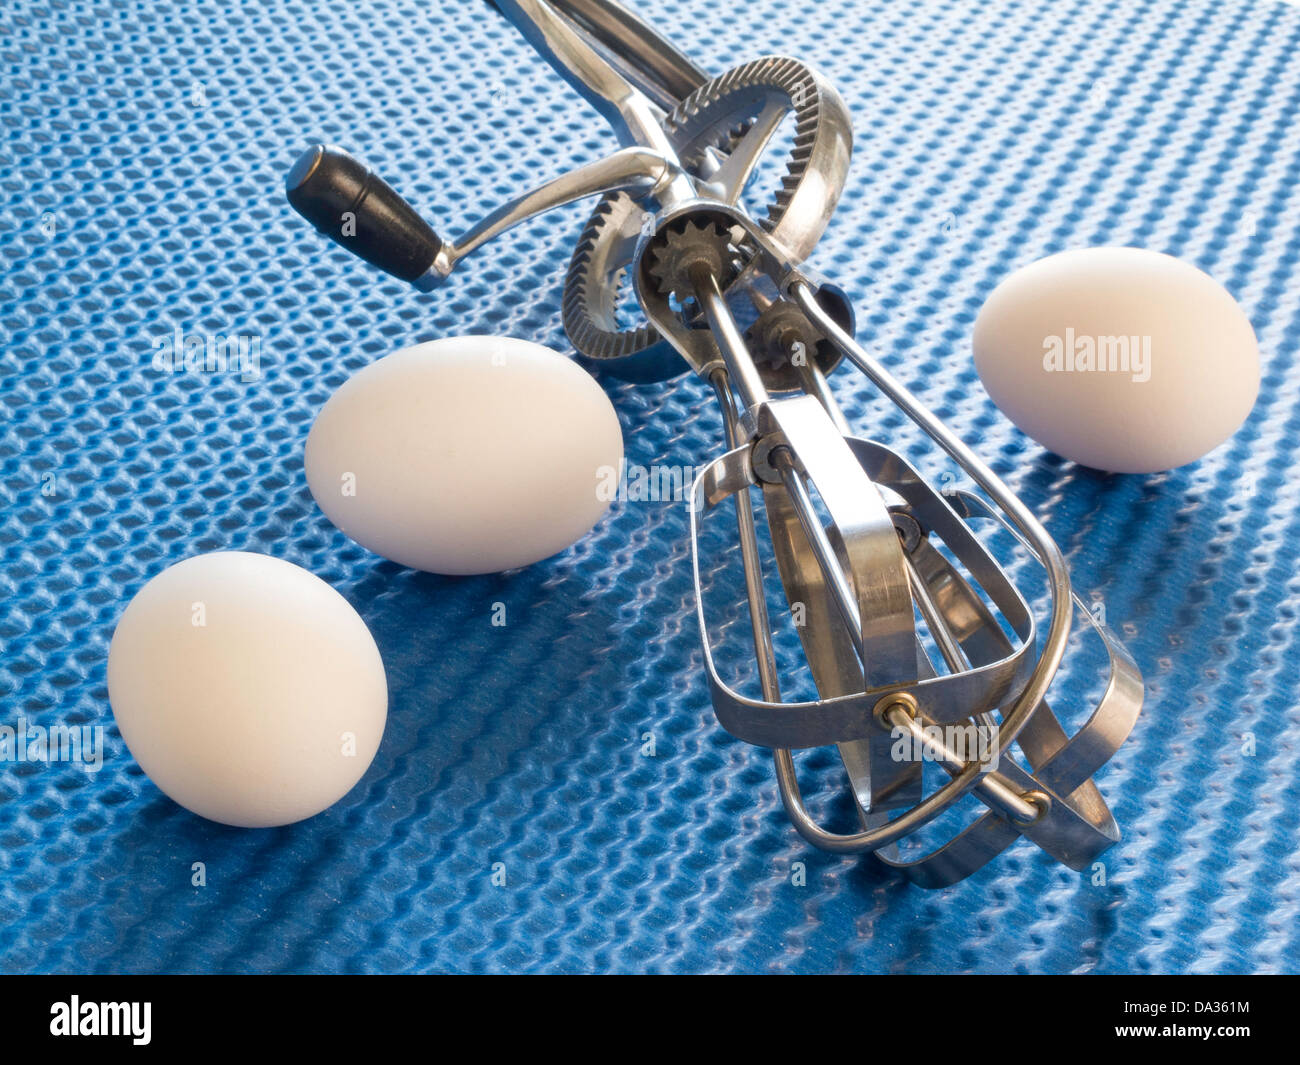 https://c8.alamy.com/comp/DA361M/three-eggs-with-vintage-rotary-hand-beater-on-blue-background-DA361M.jpg